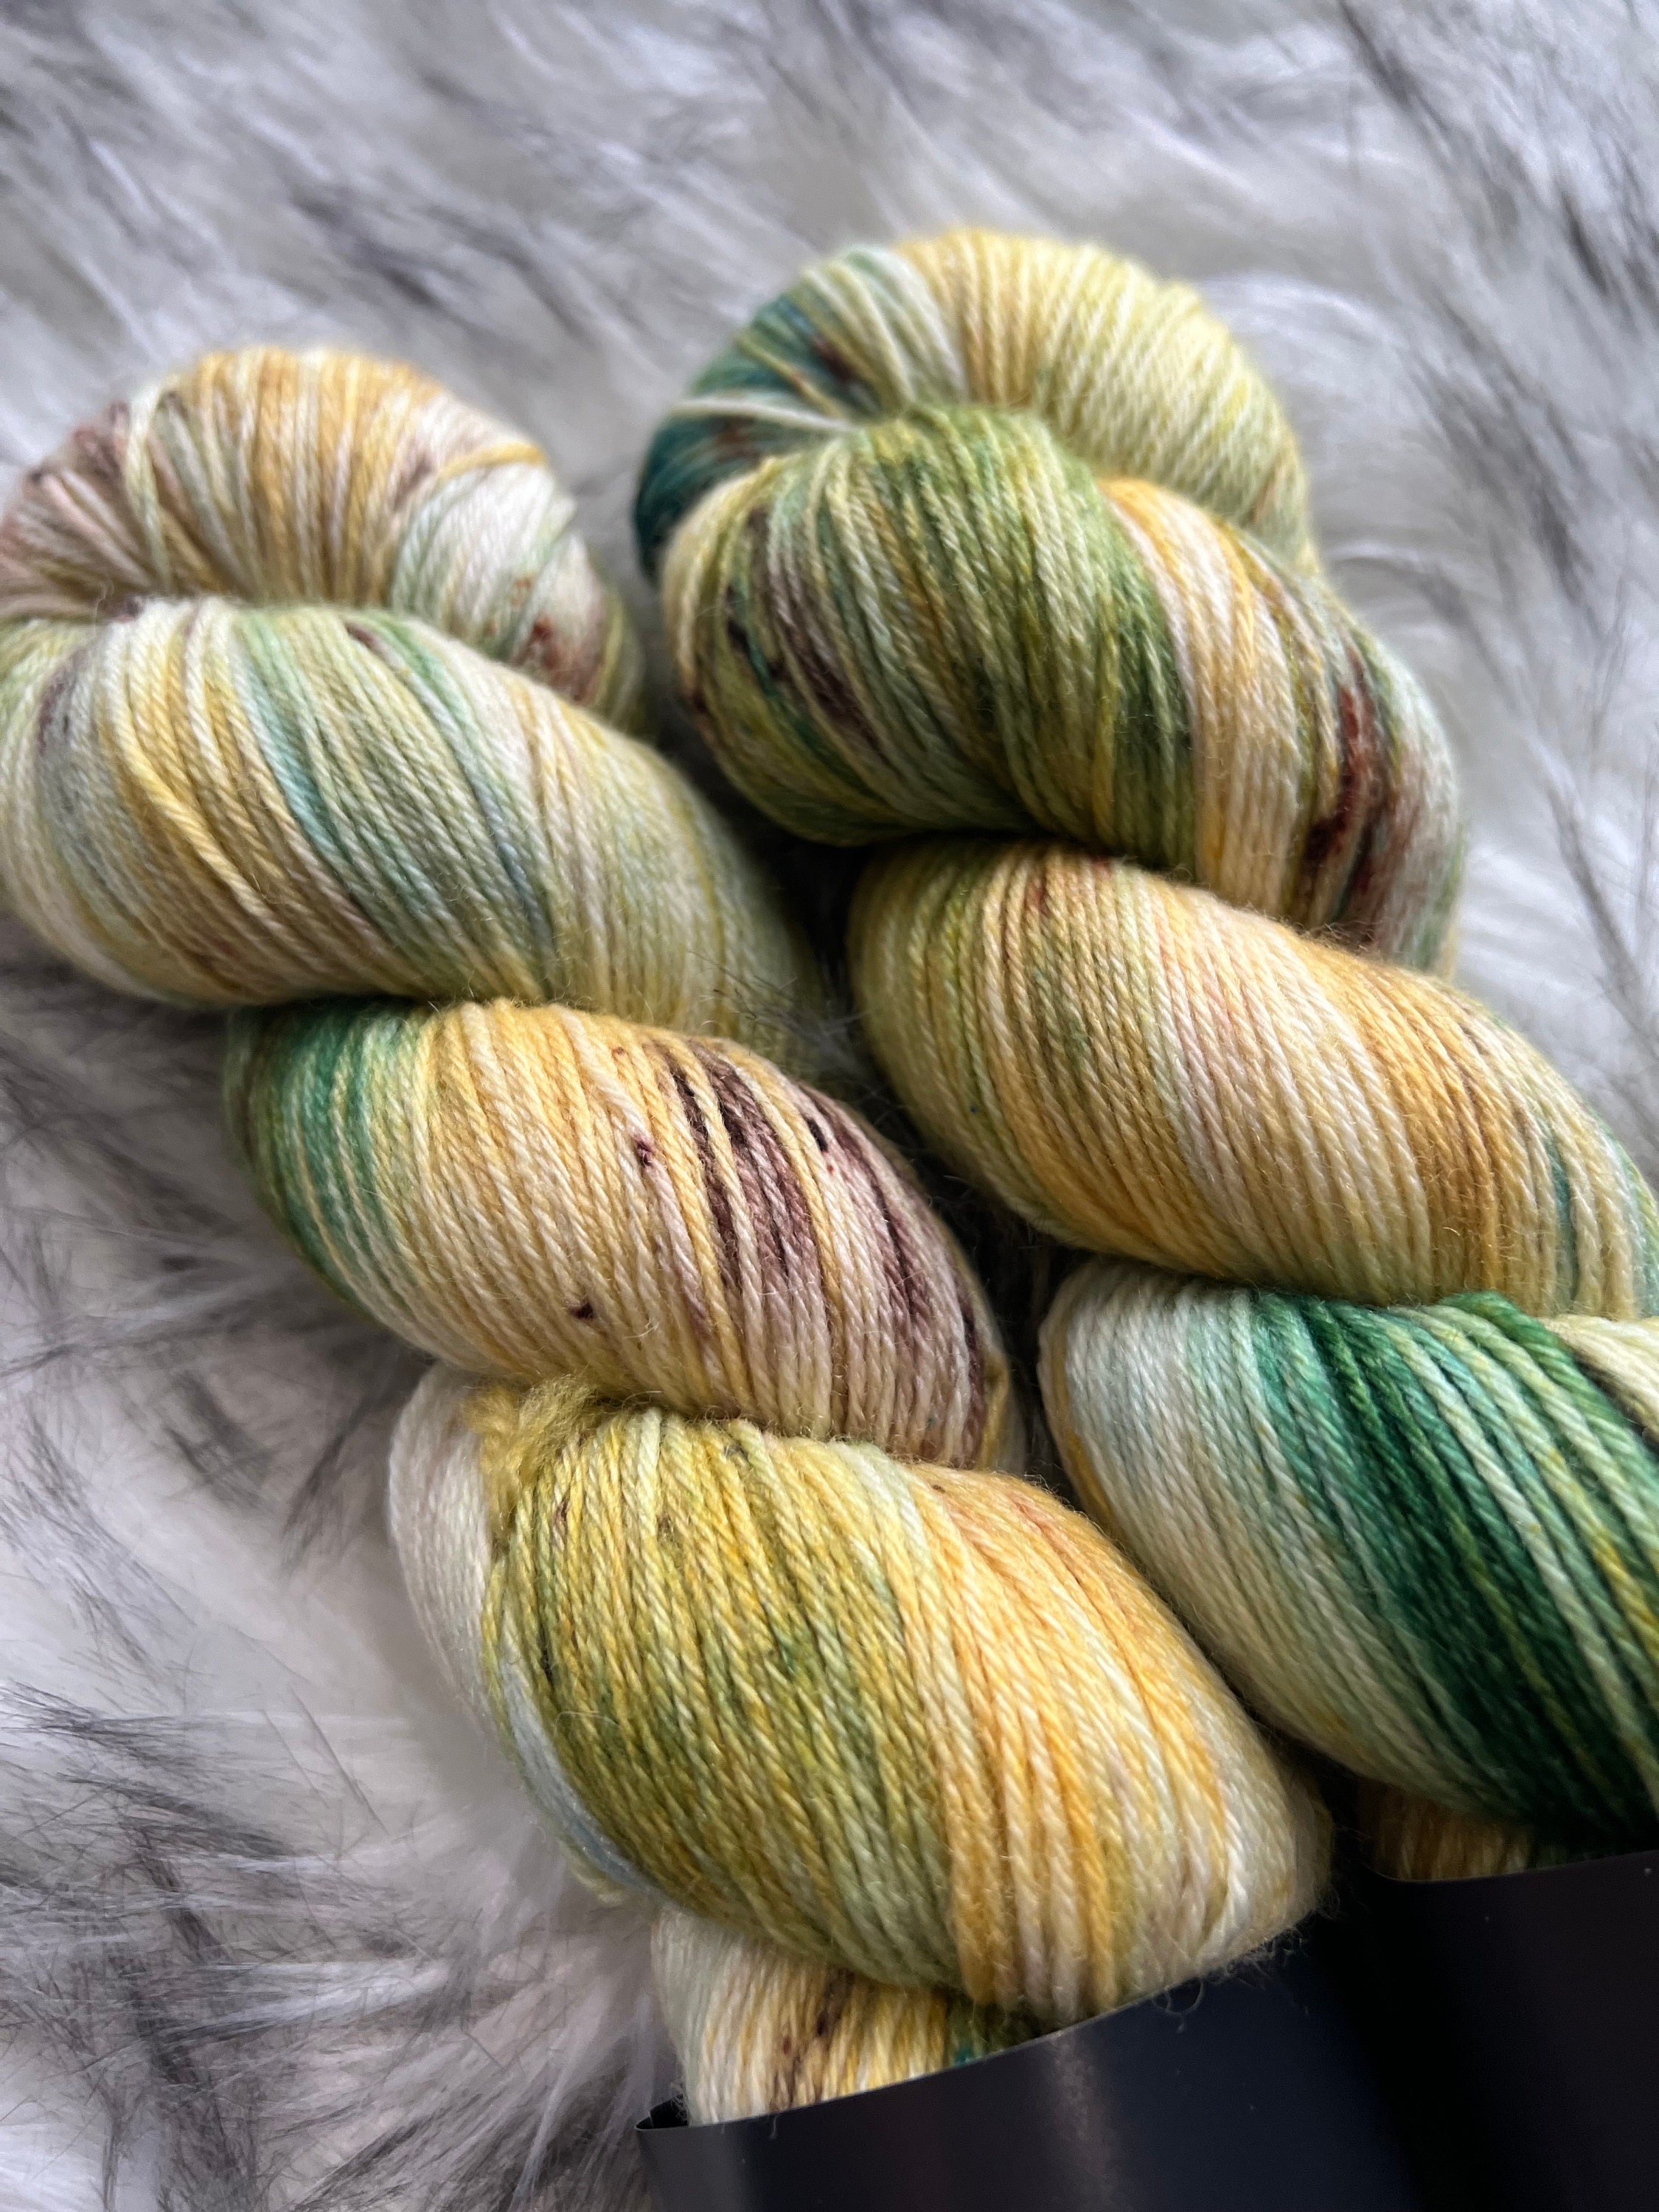 Hand Dyed Yarn. DK Weight Superwash Merino Wool. Forest Multi. Indie Dyed  Yarn. Dark Green Olive Moss Wool Yarn. Variegated Knitting Yarn 